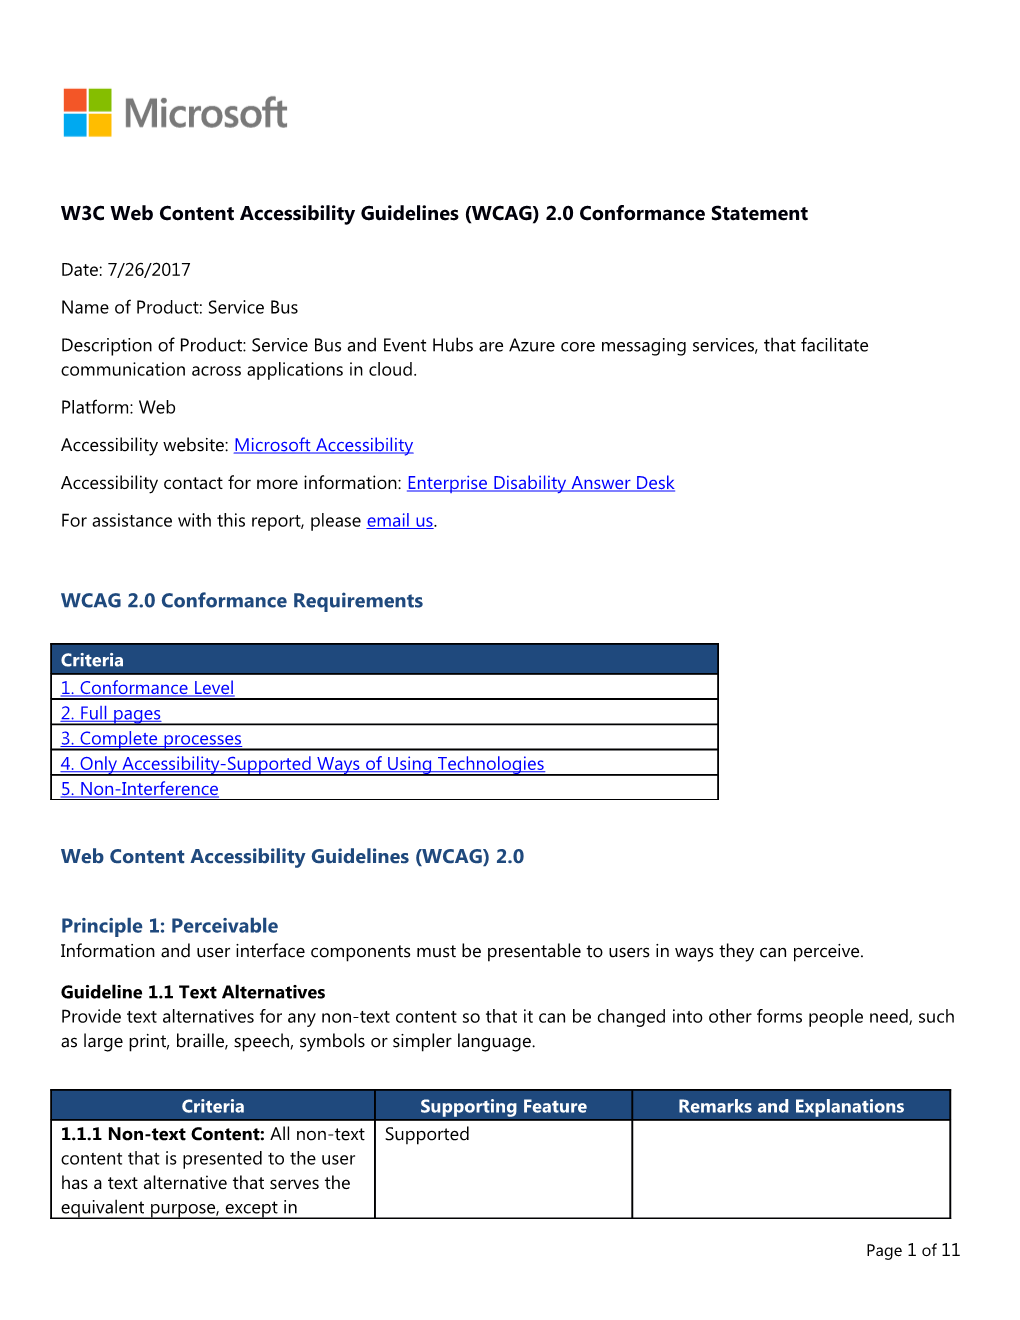 W3C Web Content Accessibility Guidelines (WCAG) 2.0 Conformance Statement s1